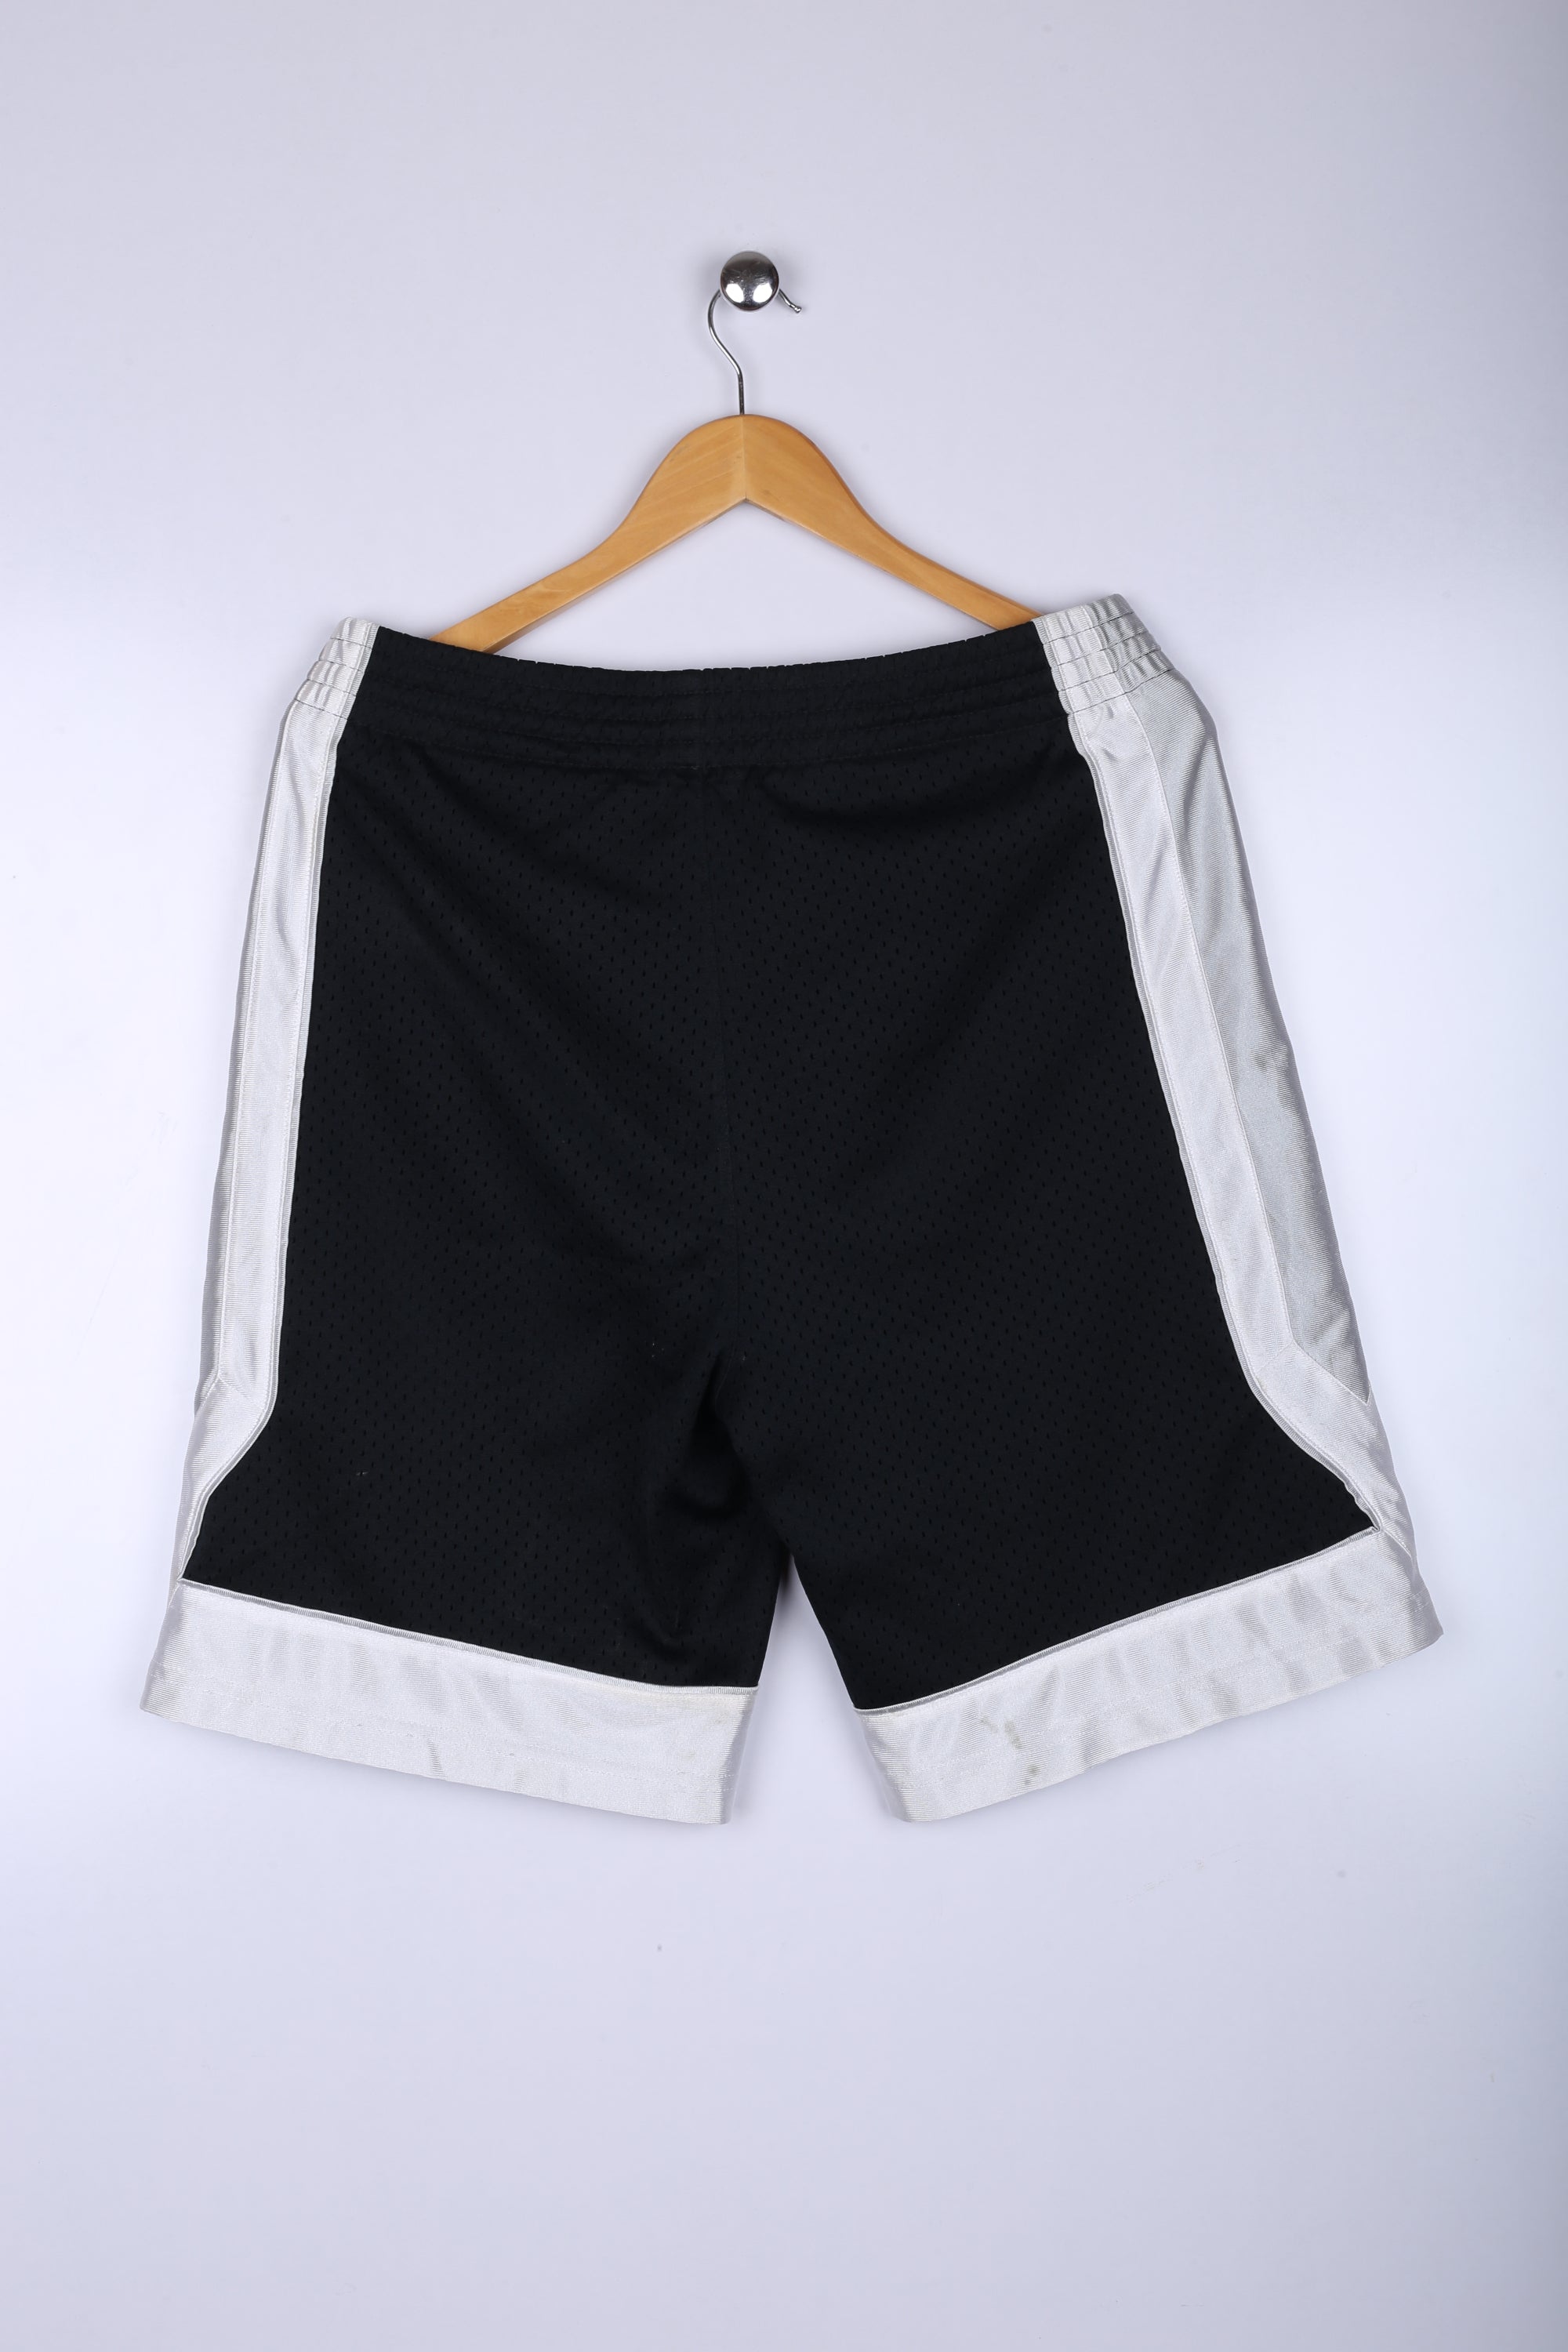 Vintage Unbranded Shorts Black/White